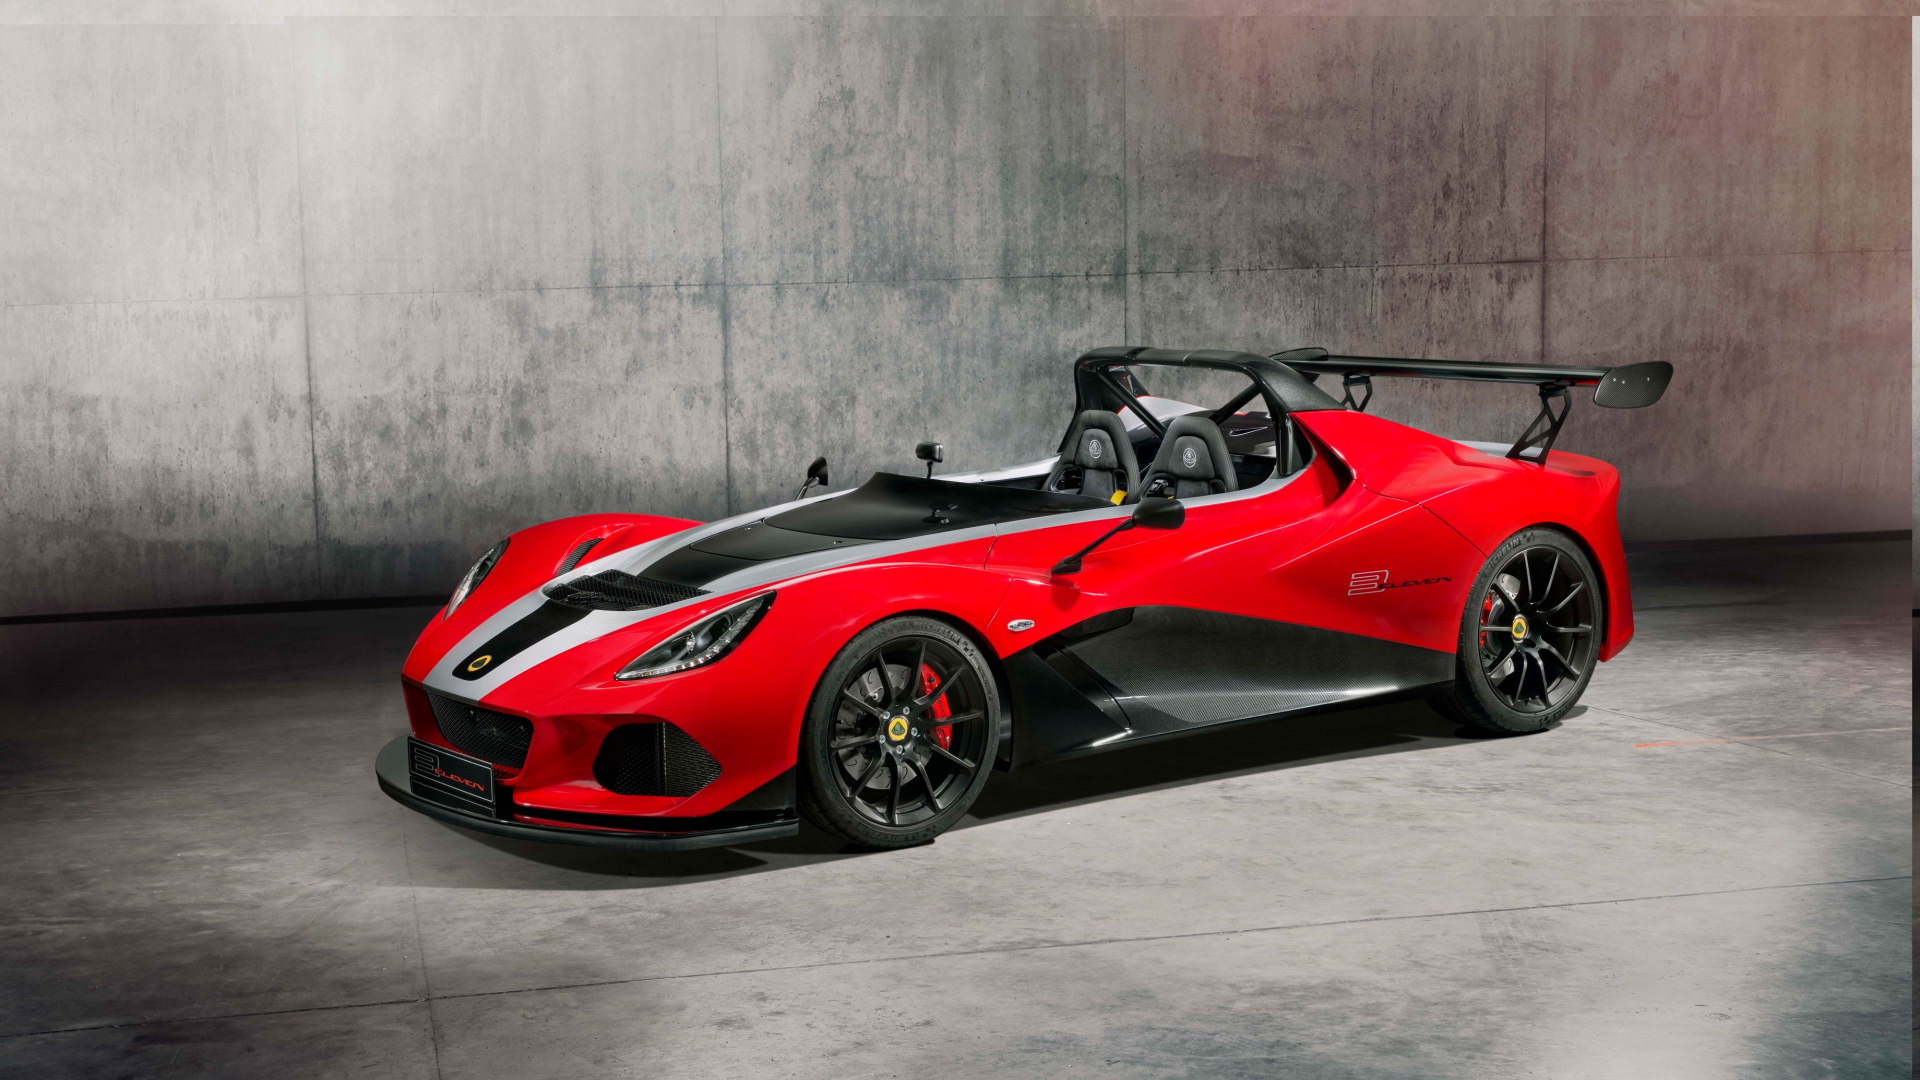 Red racing car Lotus 3 Eleven 430